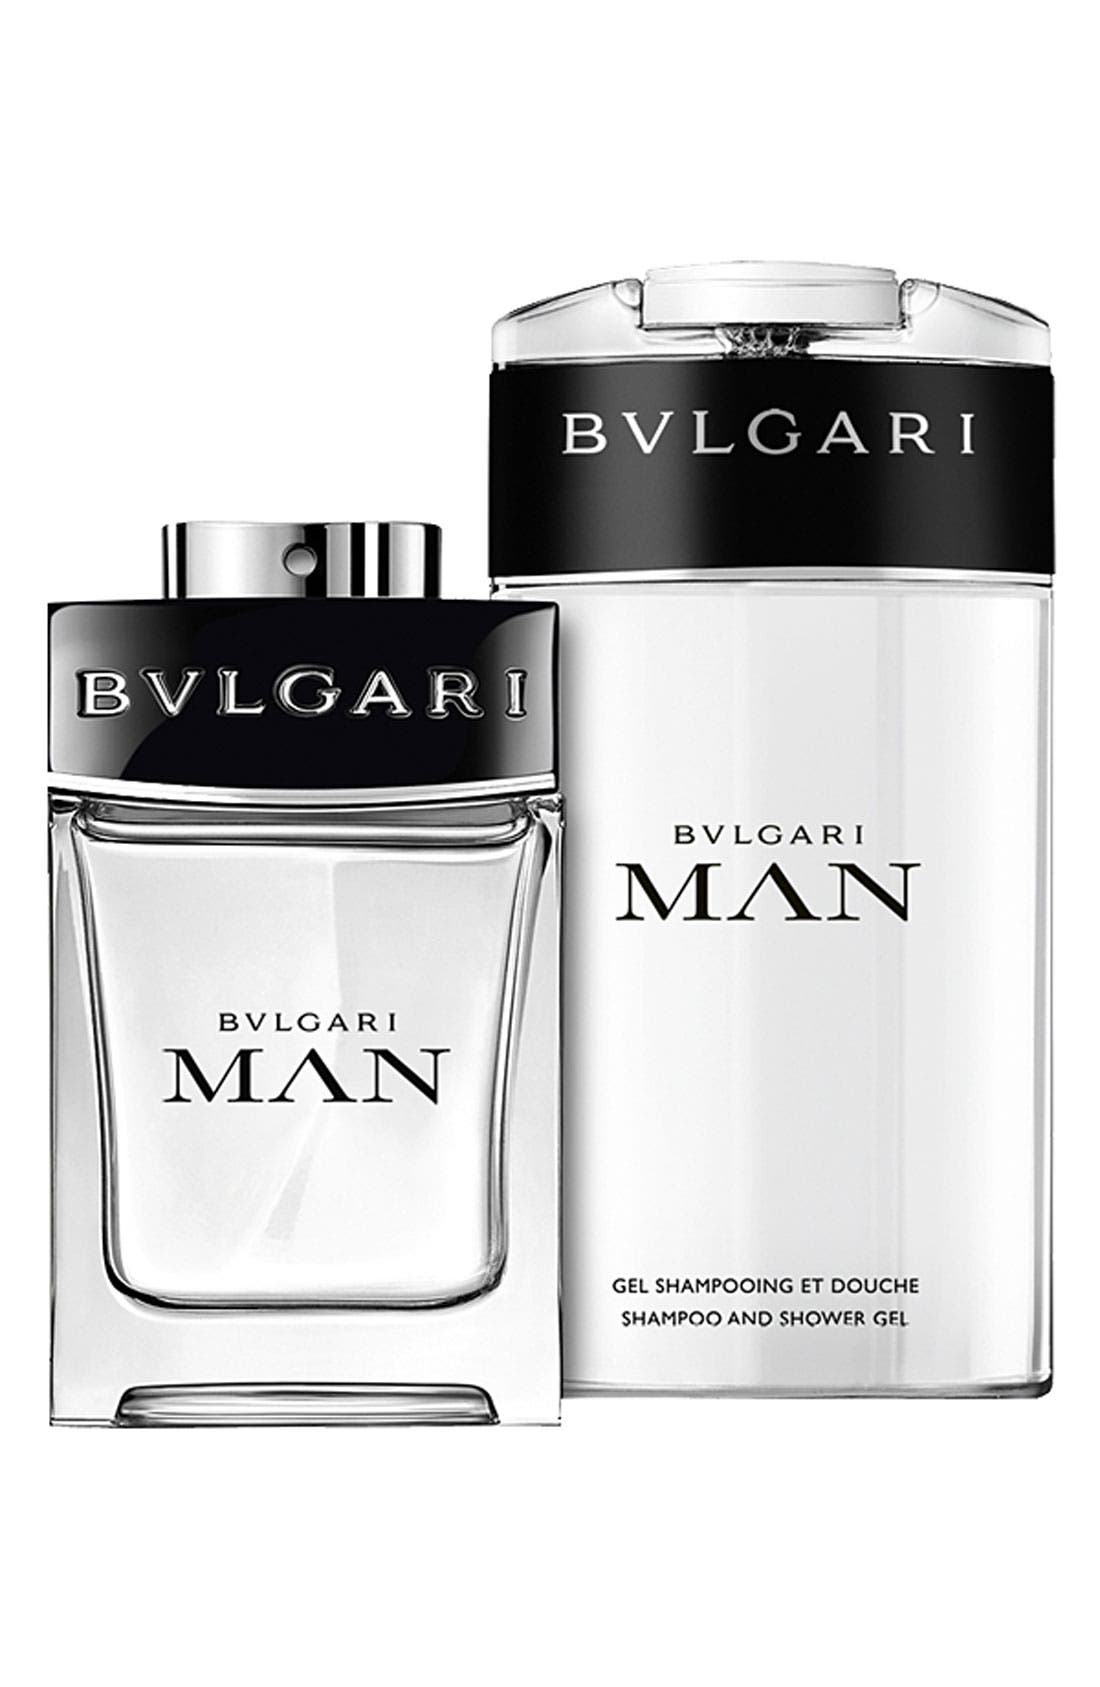 BVLGARI MAN Deluxe Set ($114 Value 